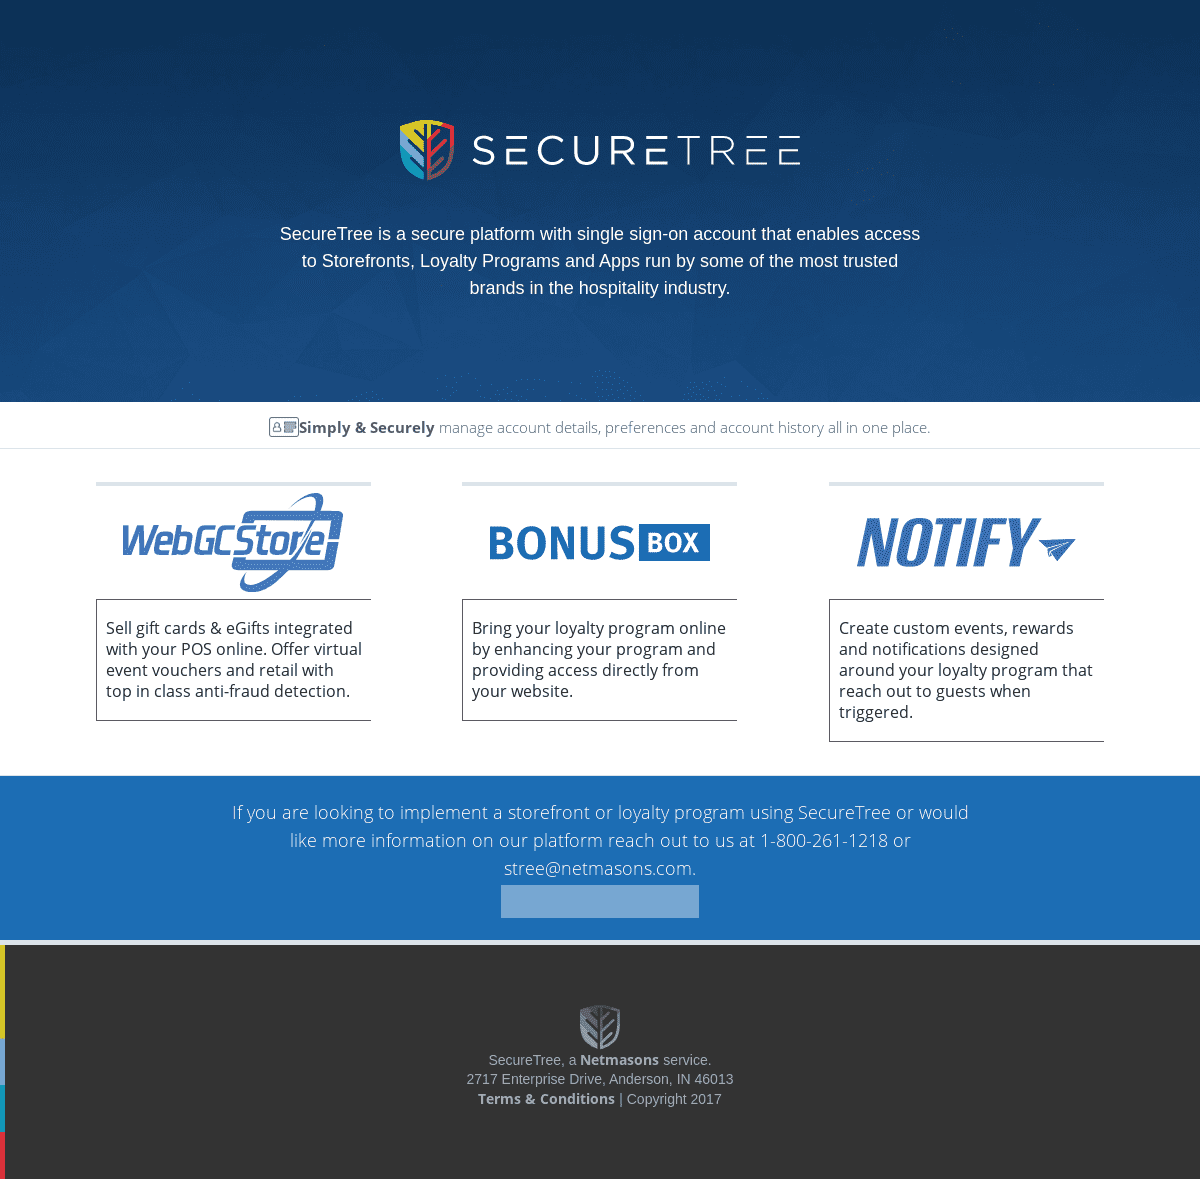 A complete backup of https://securetree.com